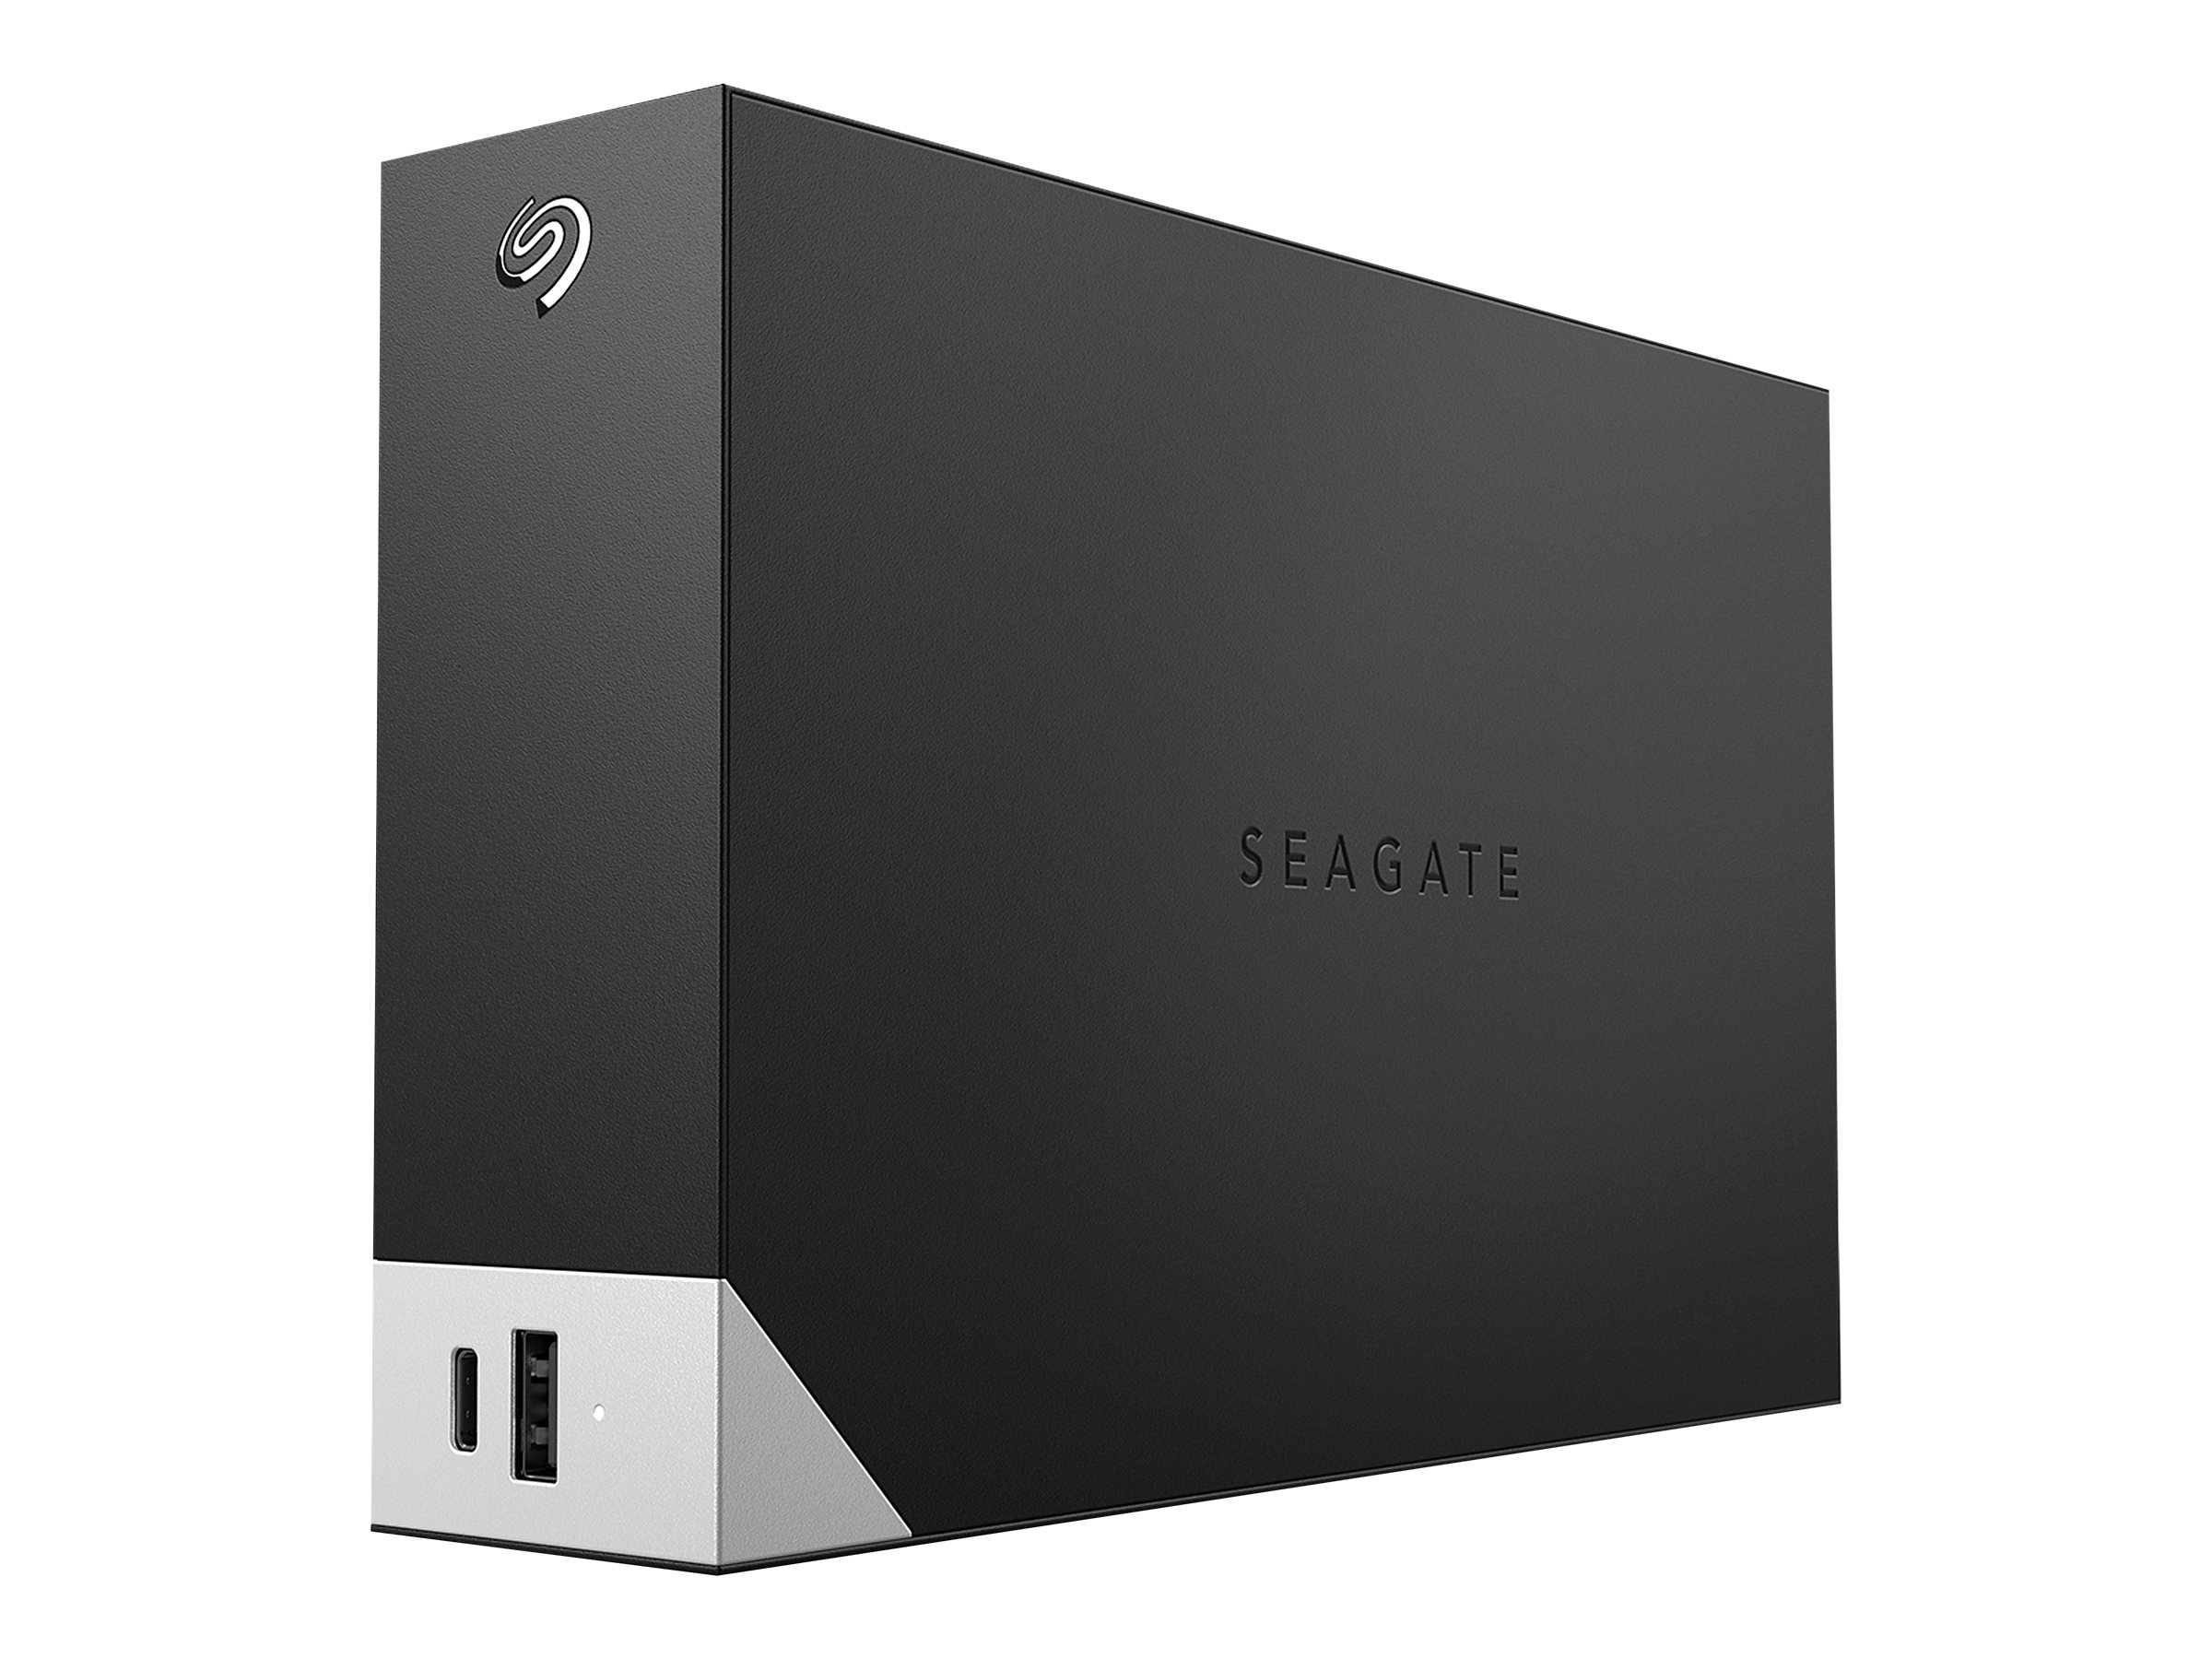 Seagate One Touch with hub STLC20000400 - Festplatte - 20 TB - extern (Stationär) - USB 3.0 - Schwarz